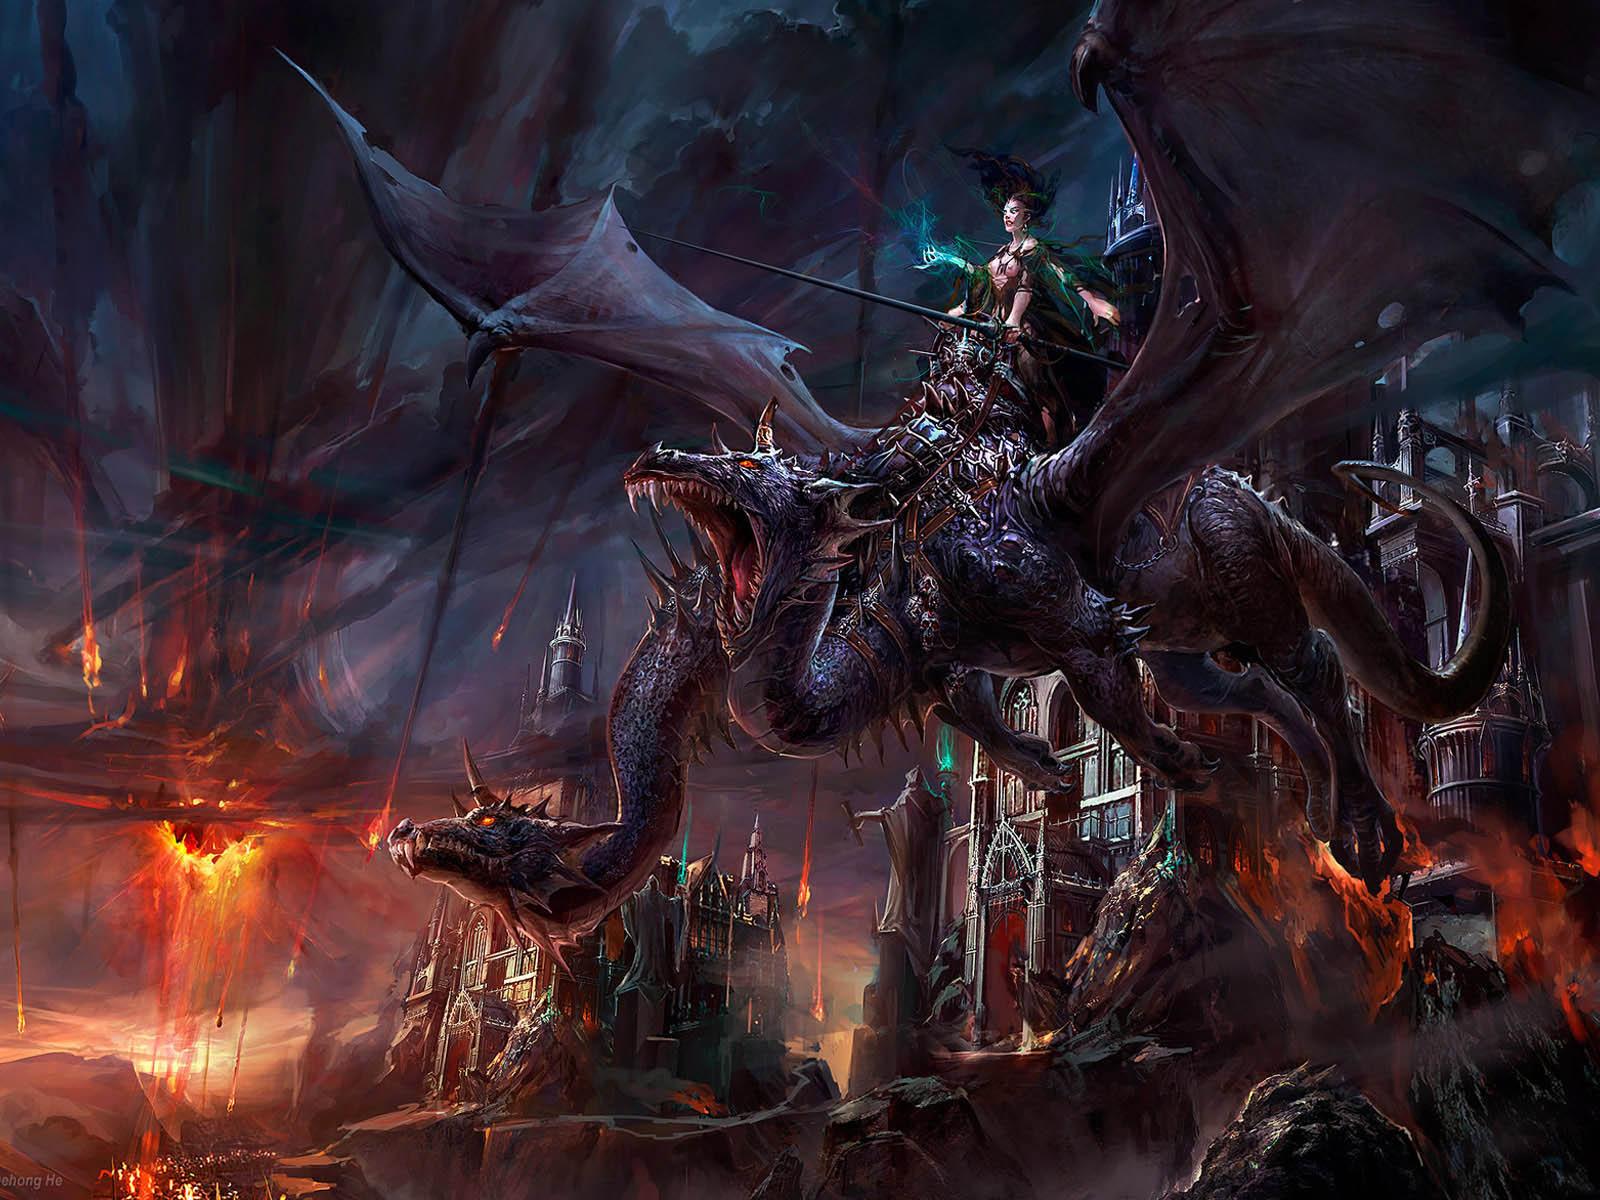 Two Headed Monter Dragon Fighting < Fantasy < Gallery < Desktop